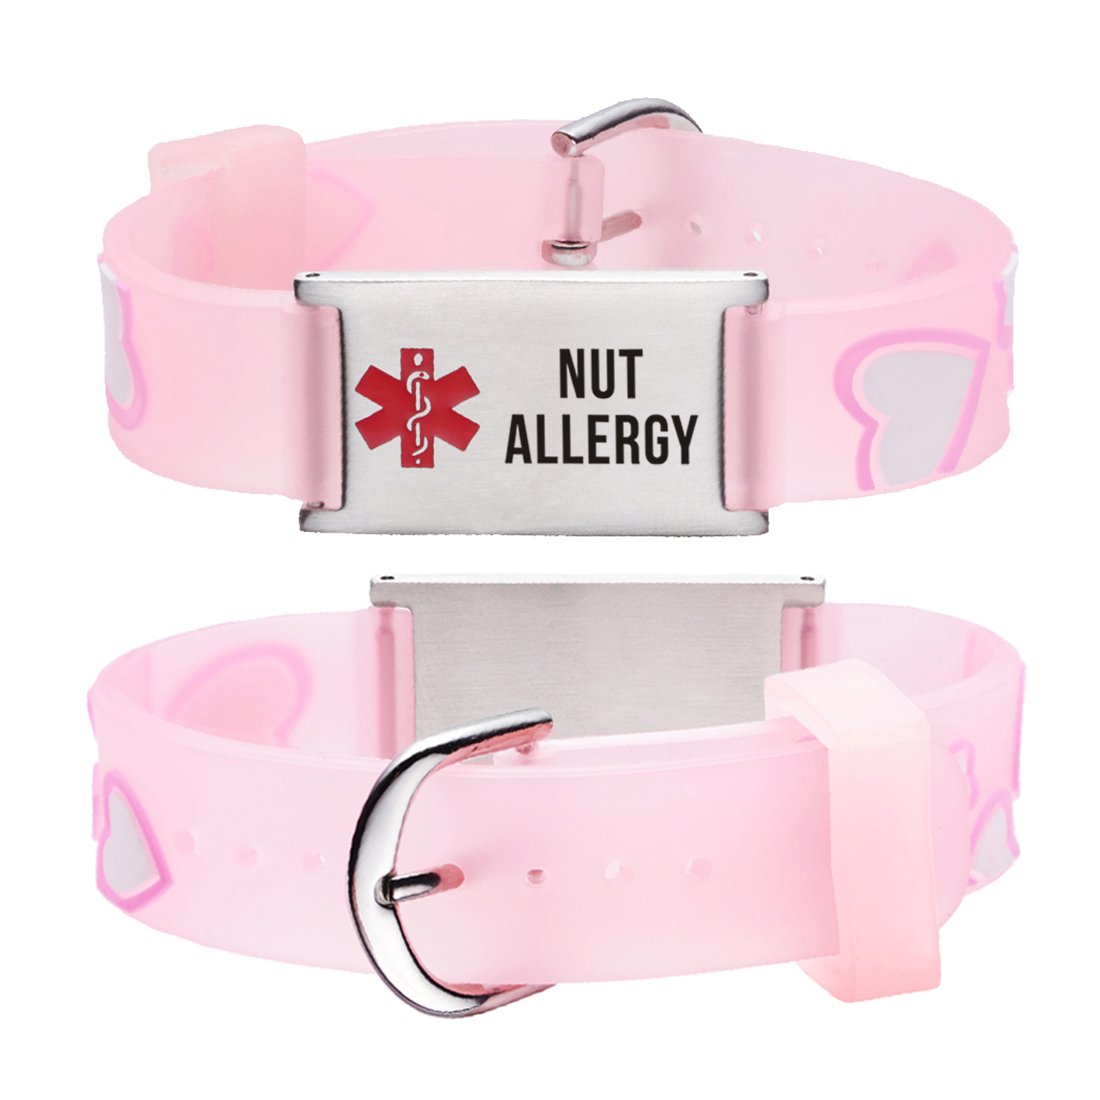 Nut allergy  bracelets for kids-Pink Heart